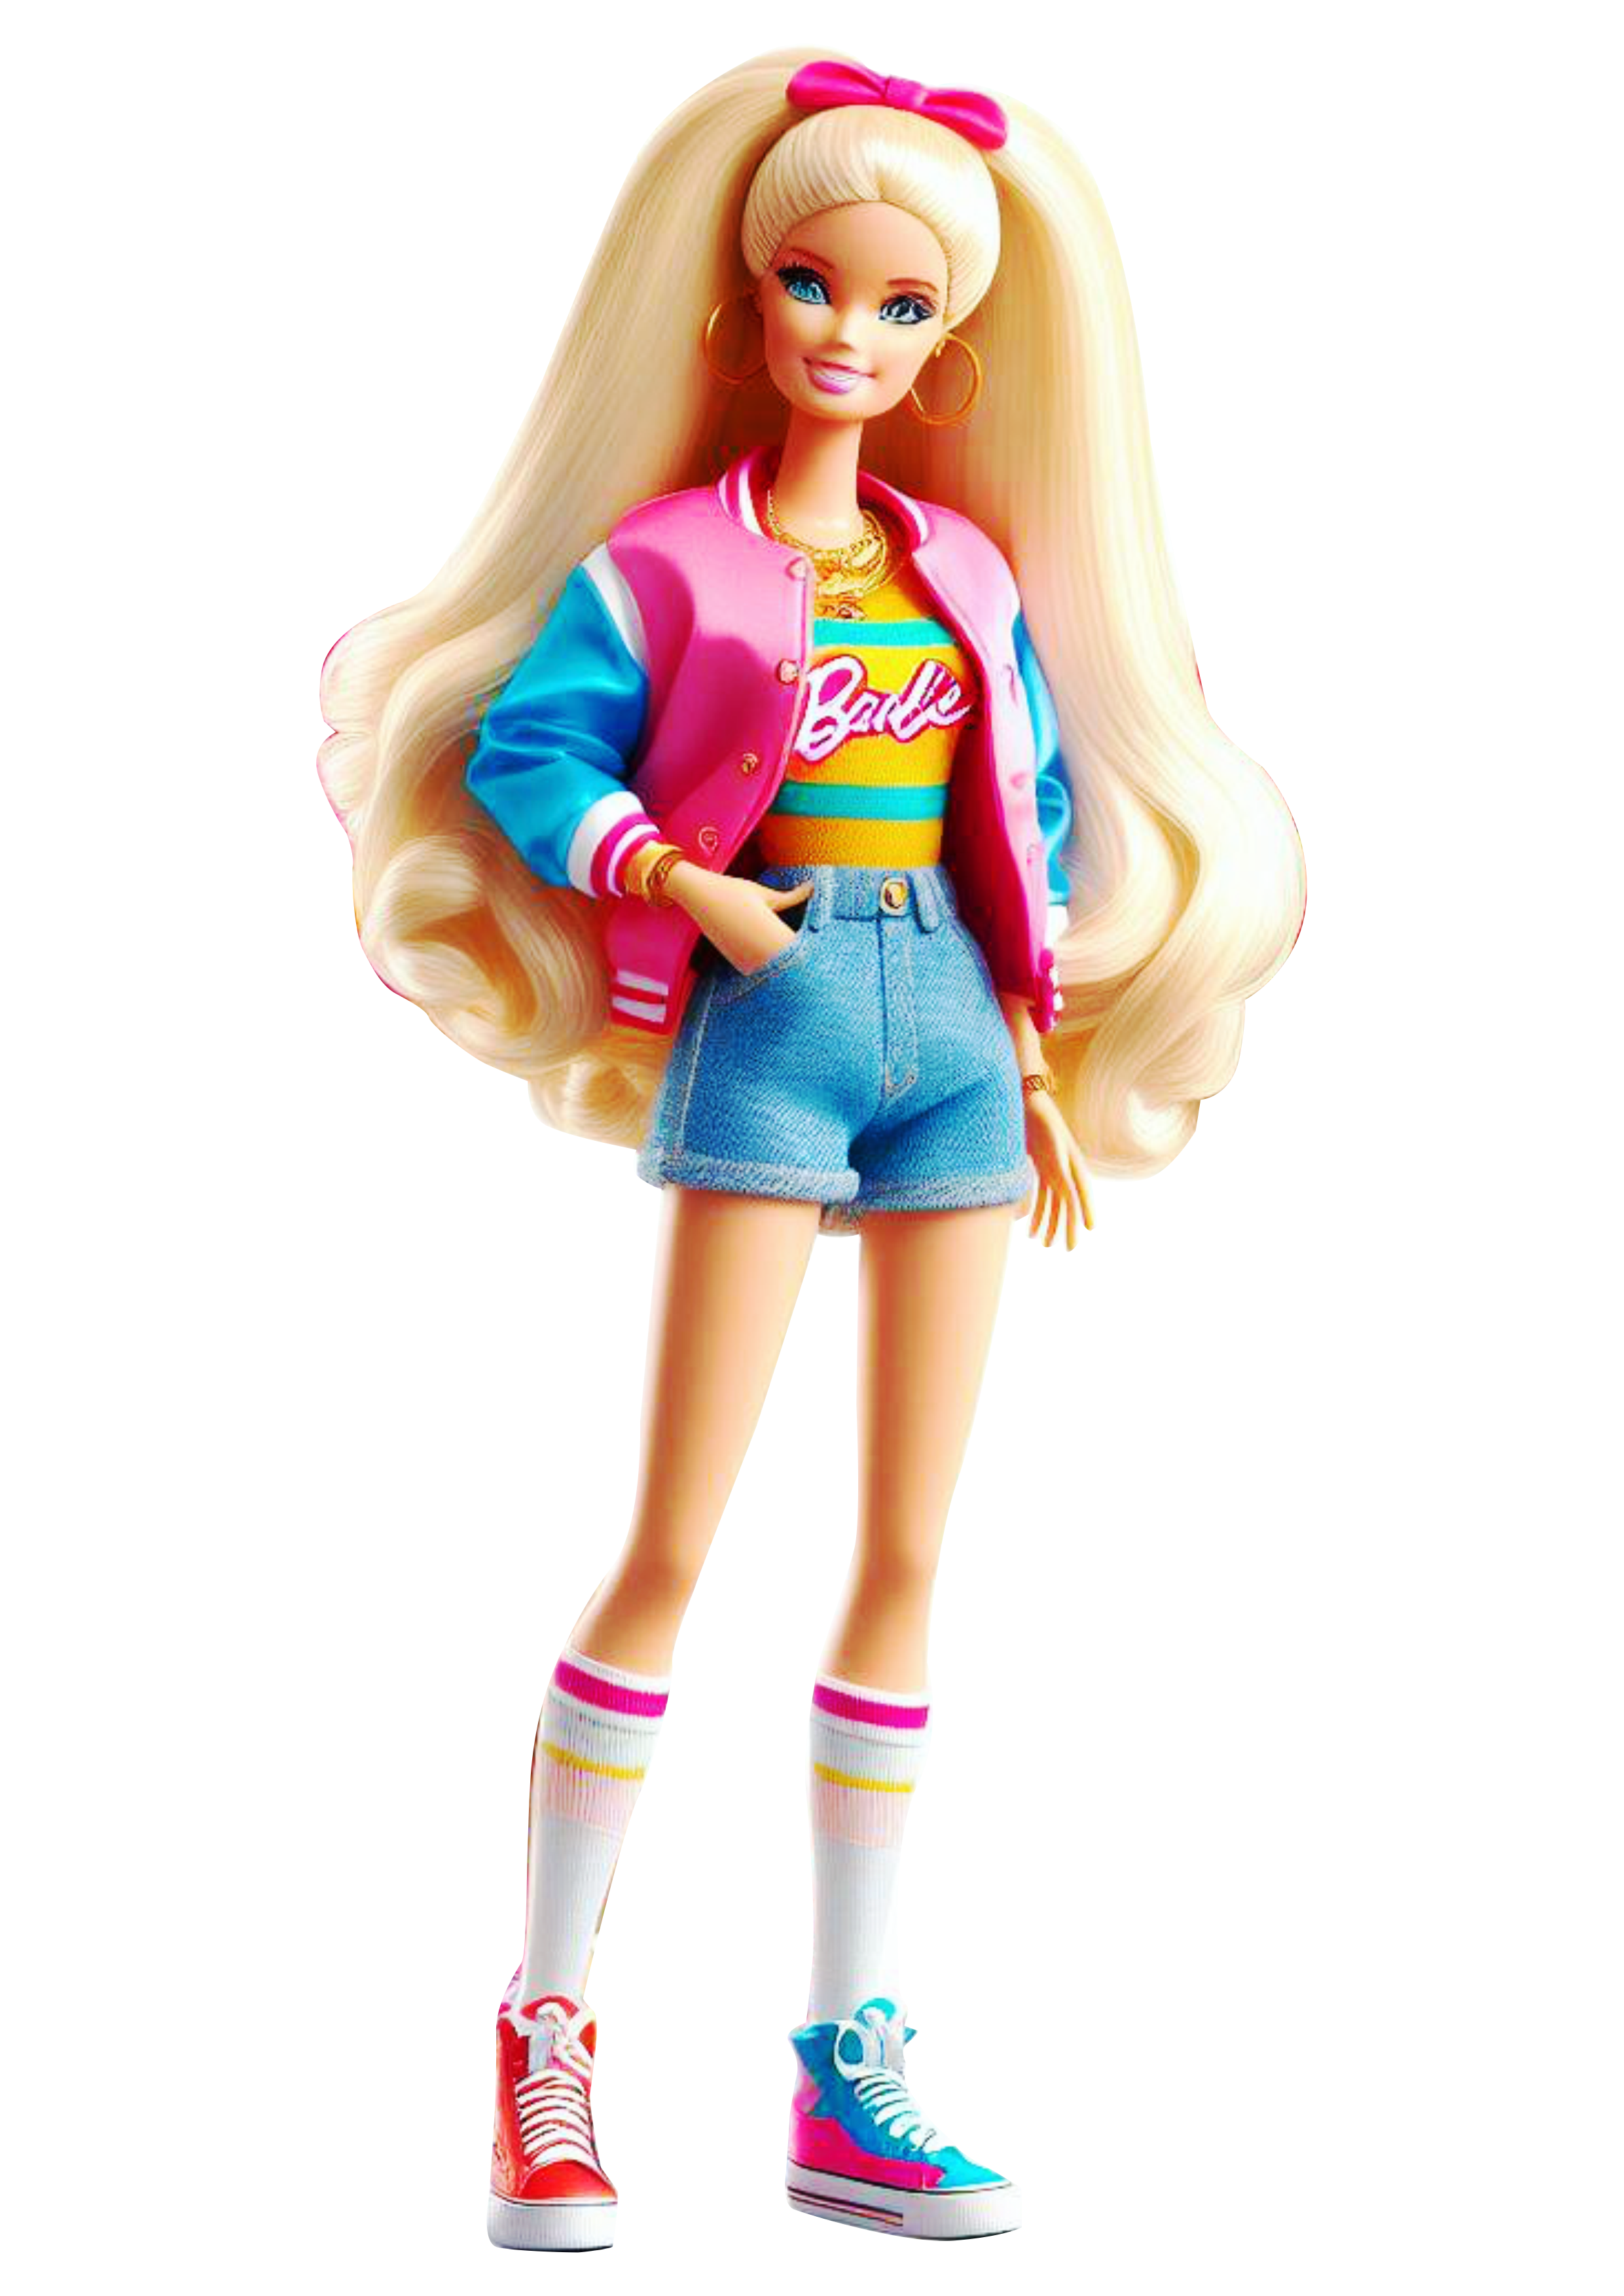 Barbie adolescente png image